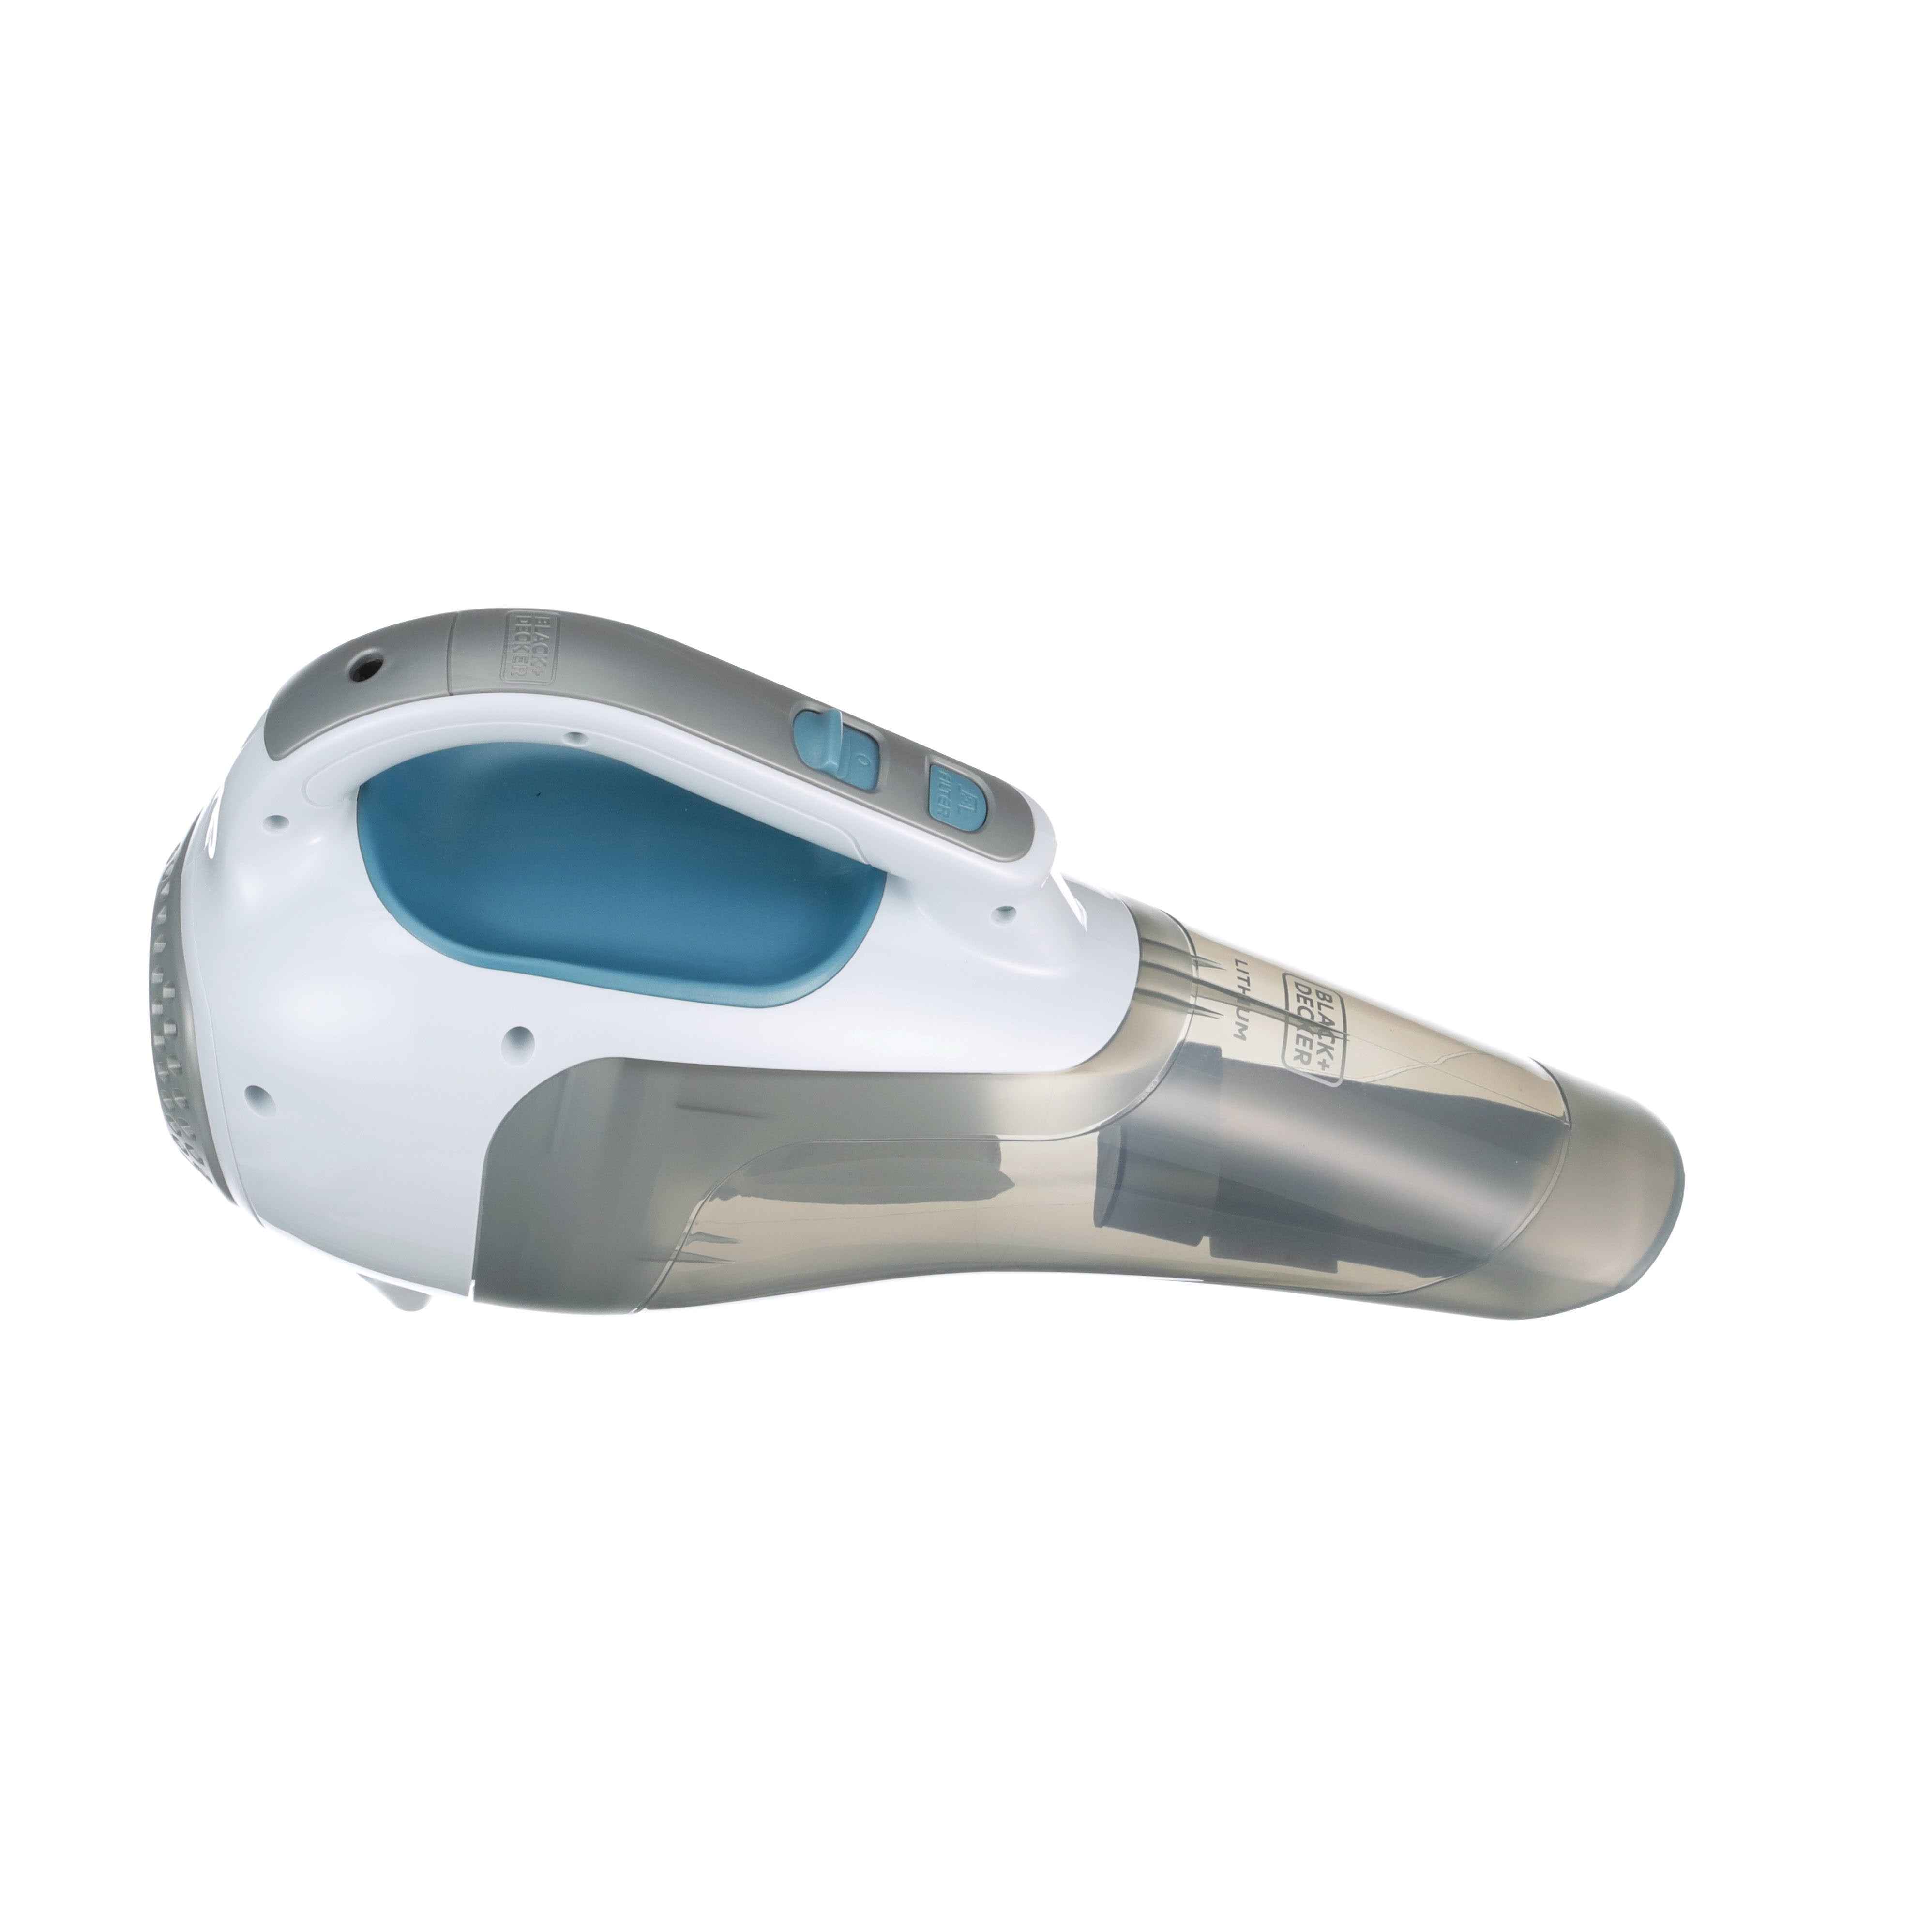 BLACK+DECKER dustbuster Cordless Handheld Vacuum, Flexi Blue/Grey/White  (HHVI315JO42)